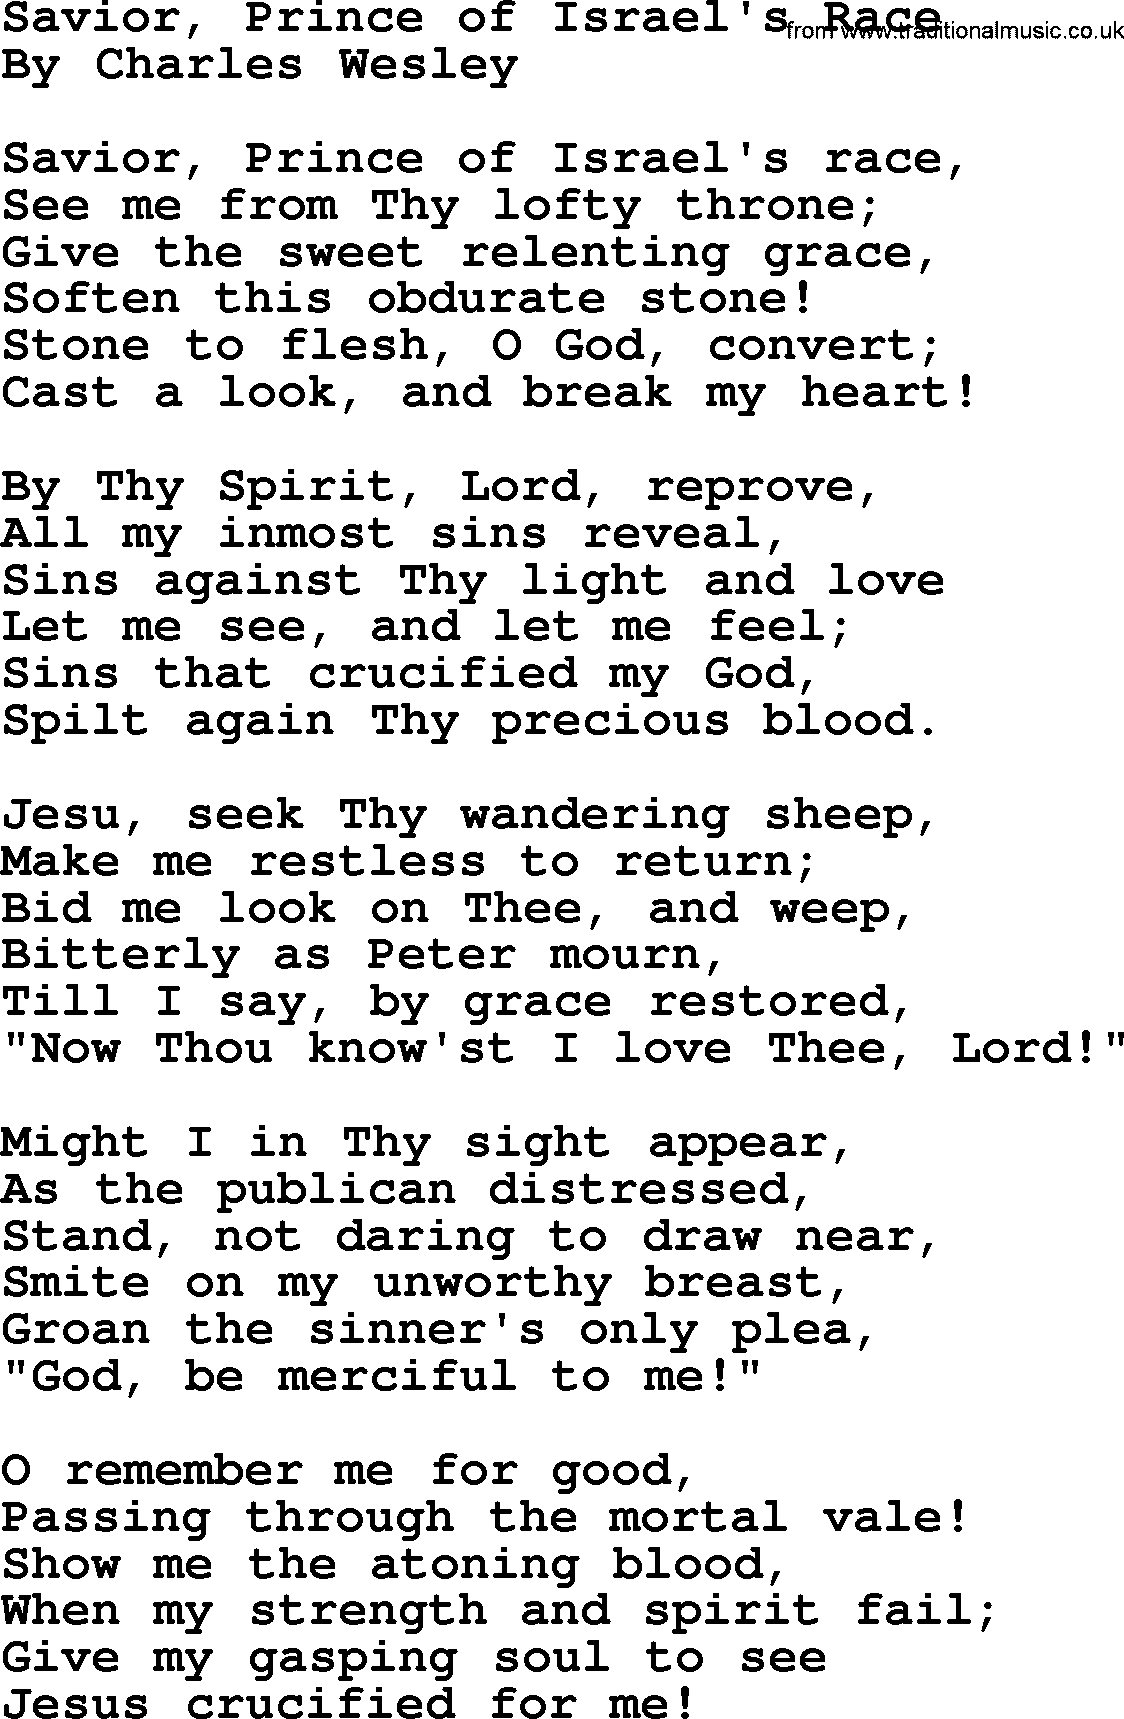 Charles Wesley hymn: Savior, Prince of Israel's Race, lyrics